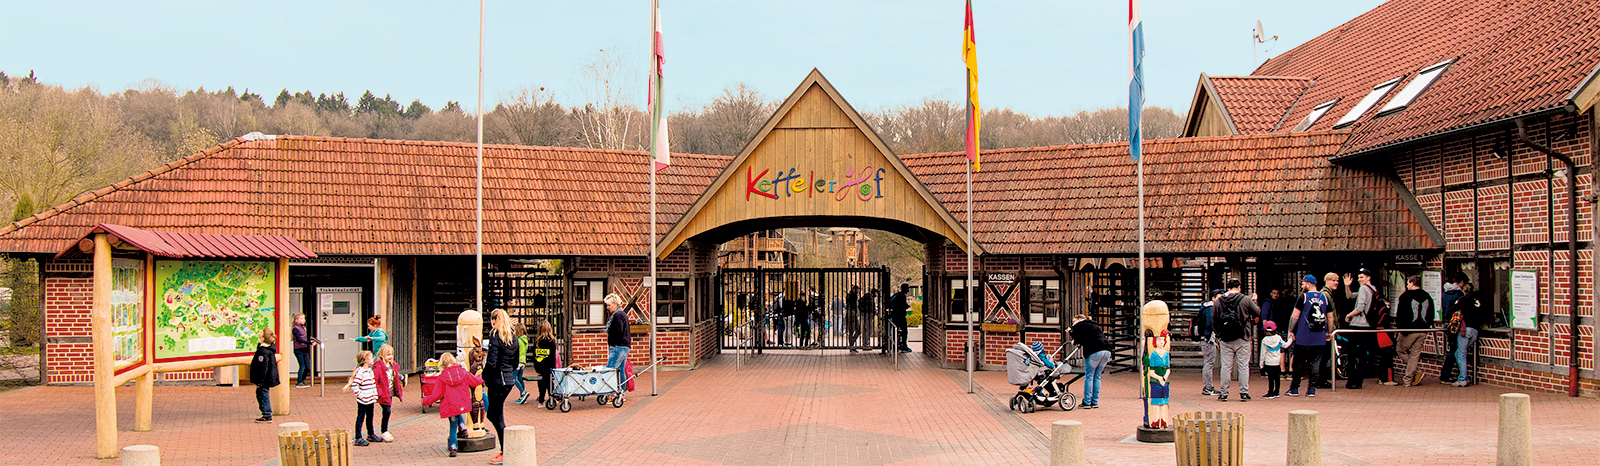 Osmo reference - entrance to Ketteler Hof adventure part in Haltern Germany